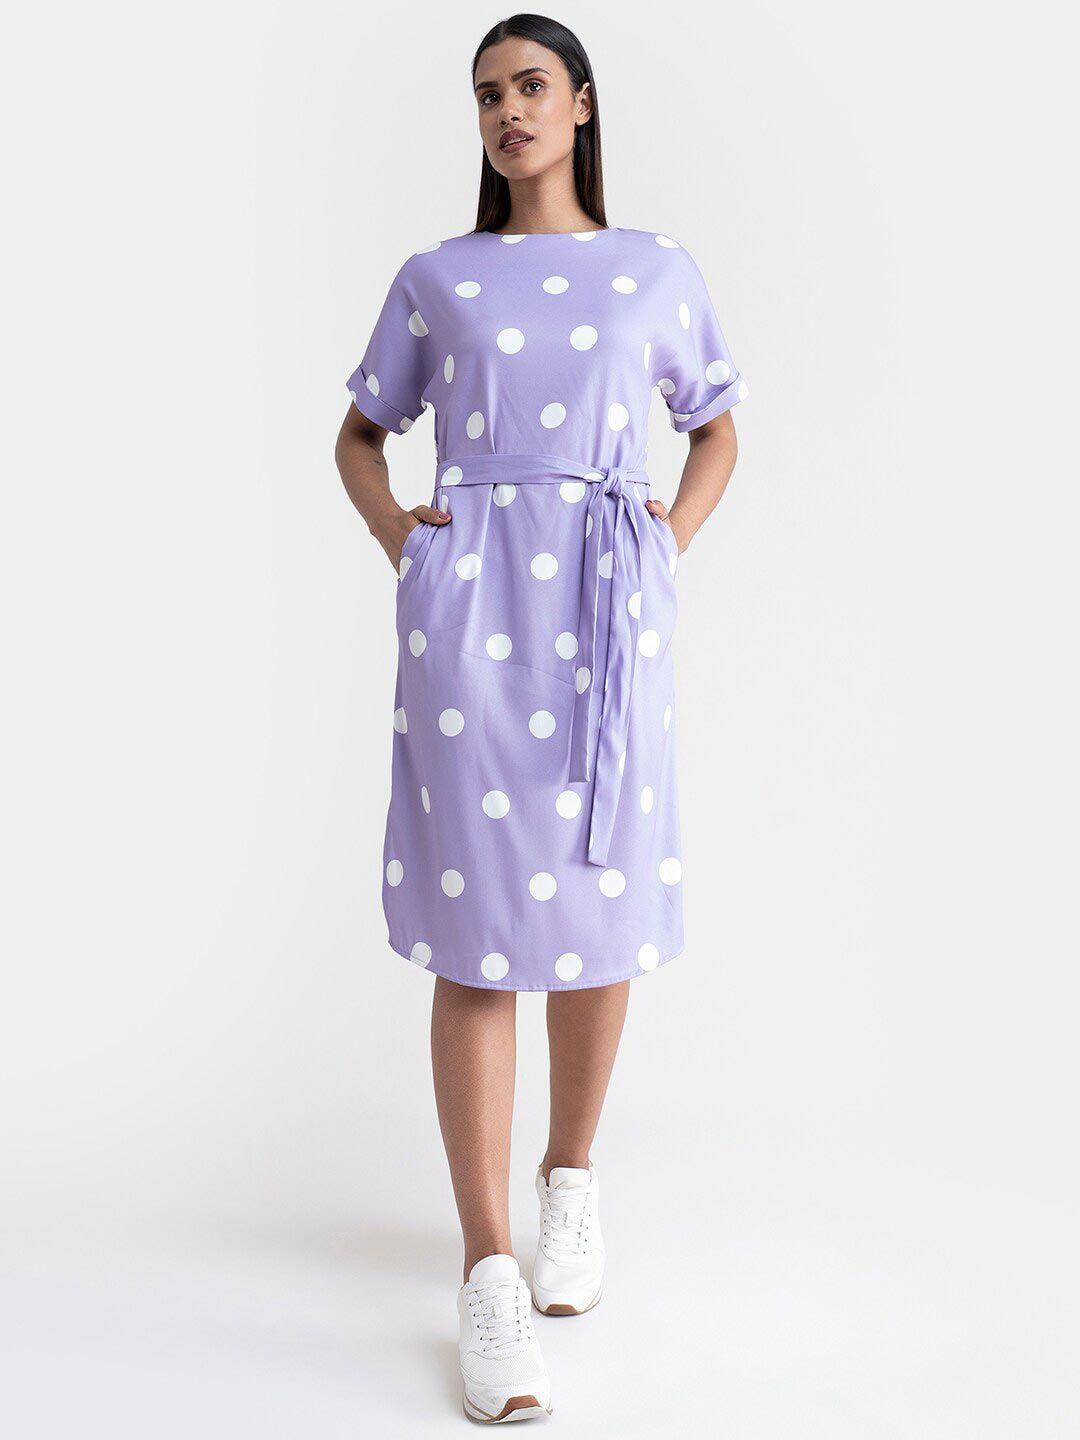 fablestreet women purple polka dot printed a-line dress